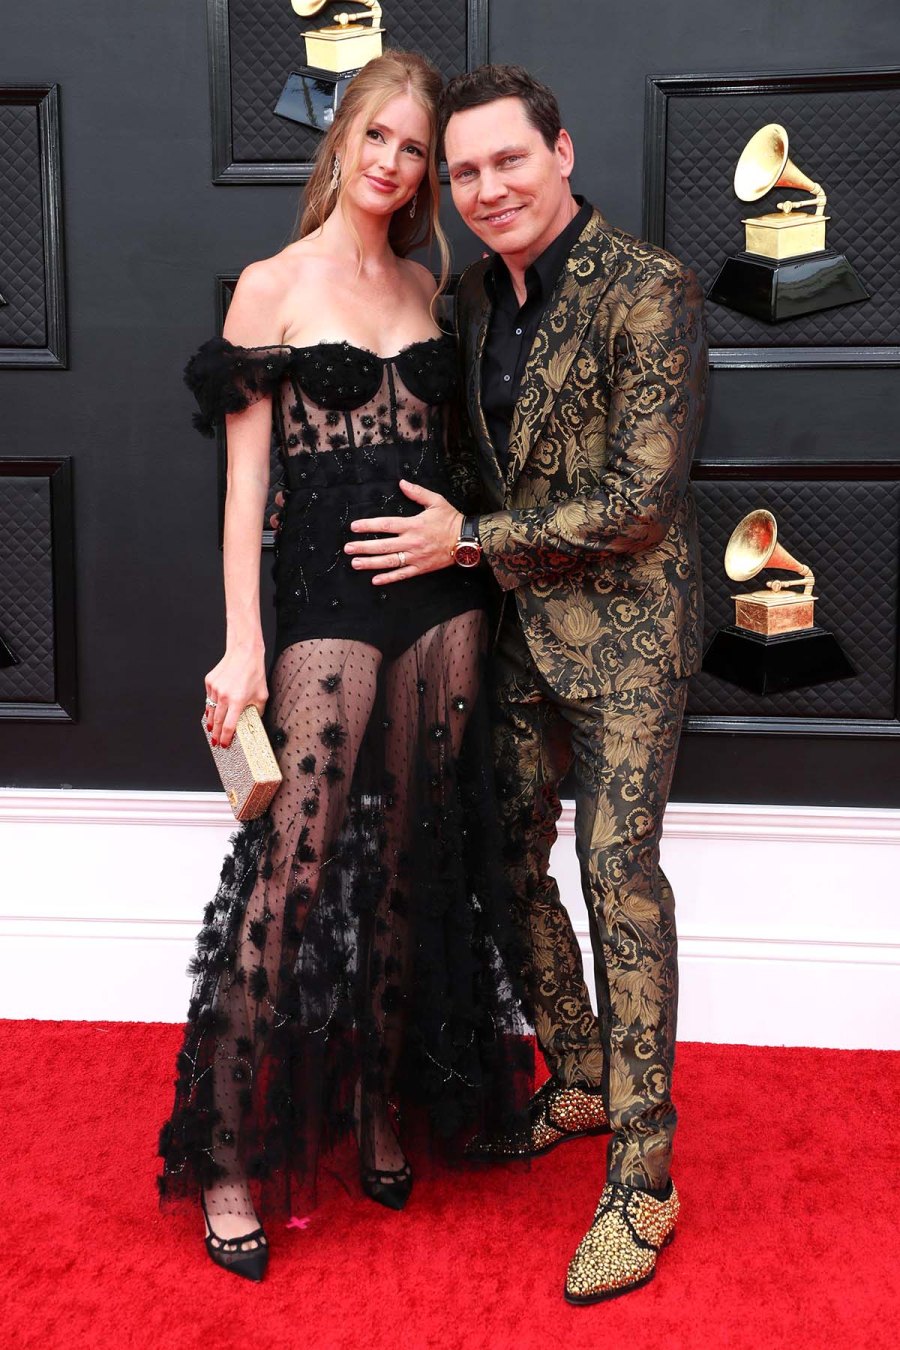 Tiestos Pregnant Wife Annika Backes Debuts Her Bump Grammys